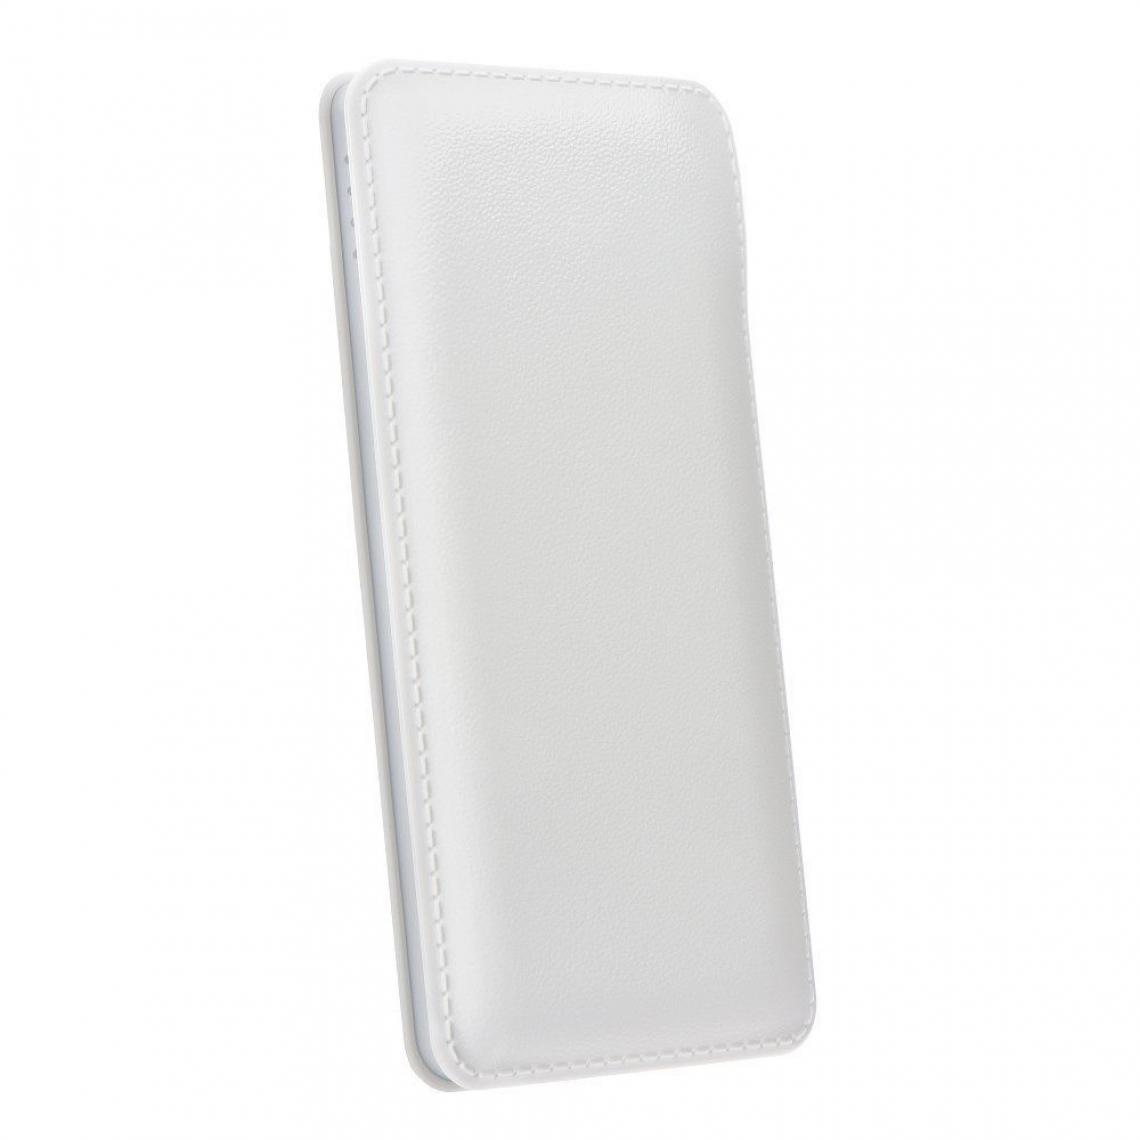 Ozzzo - Chargeur batterie externe 20000 mAh powerbank ozzzo blanc pour SAMSUNG N915 Galaxy Note Edge - Autres accessoires smartphone